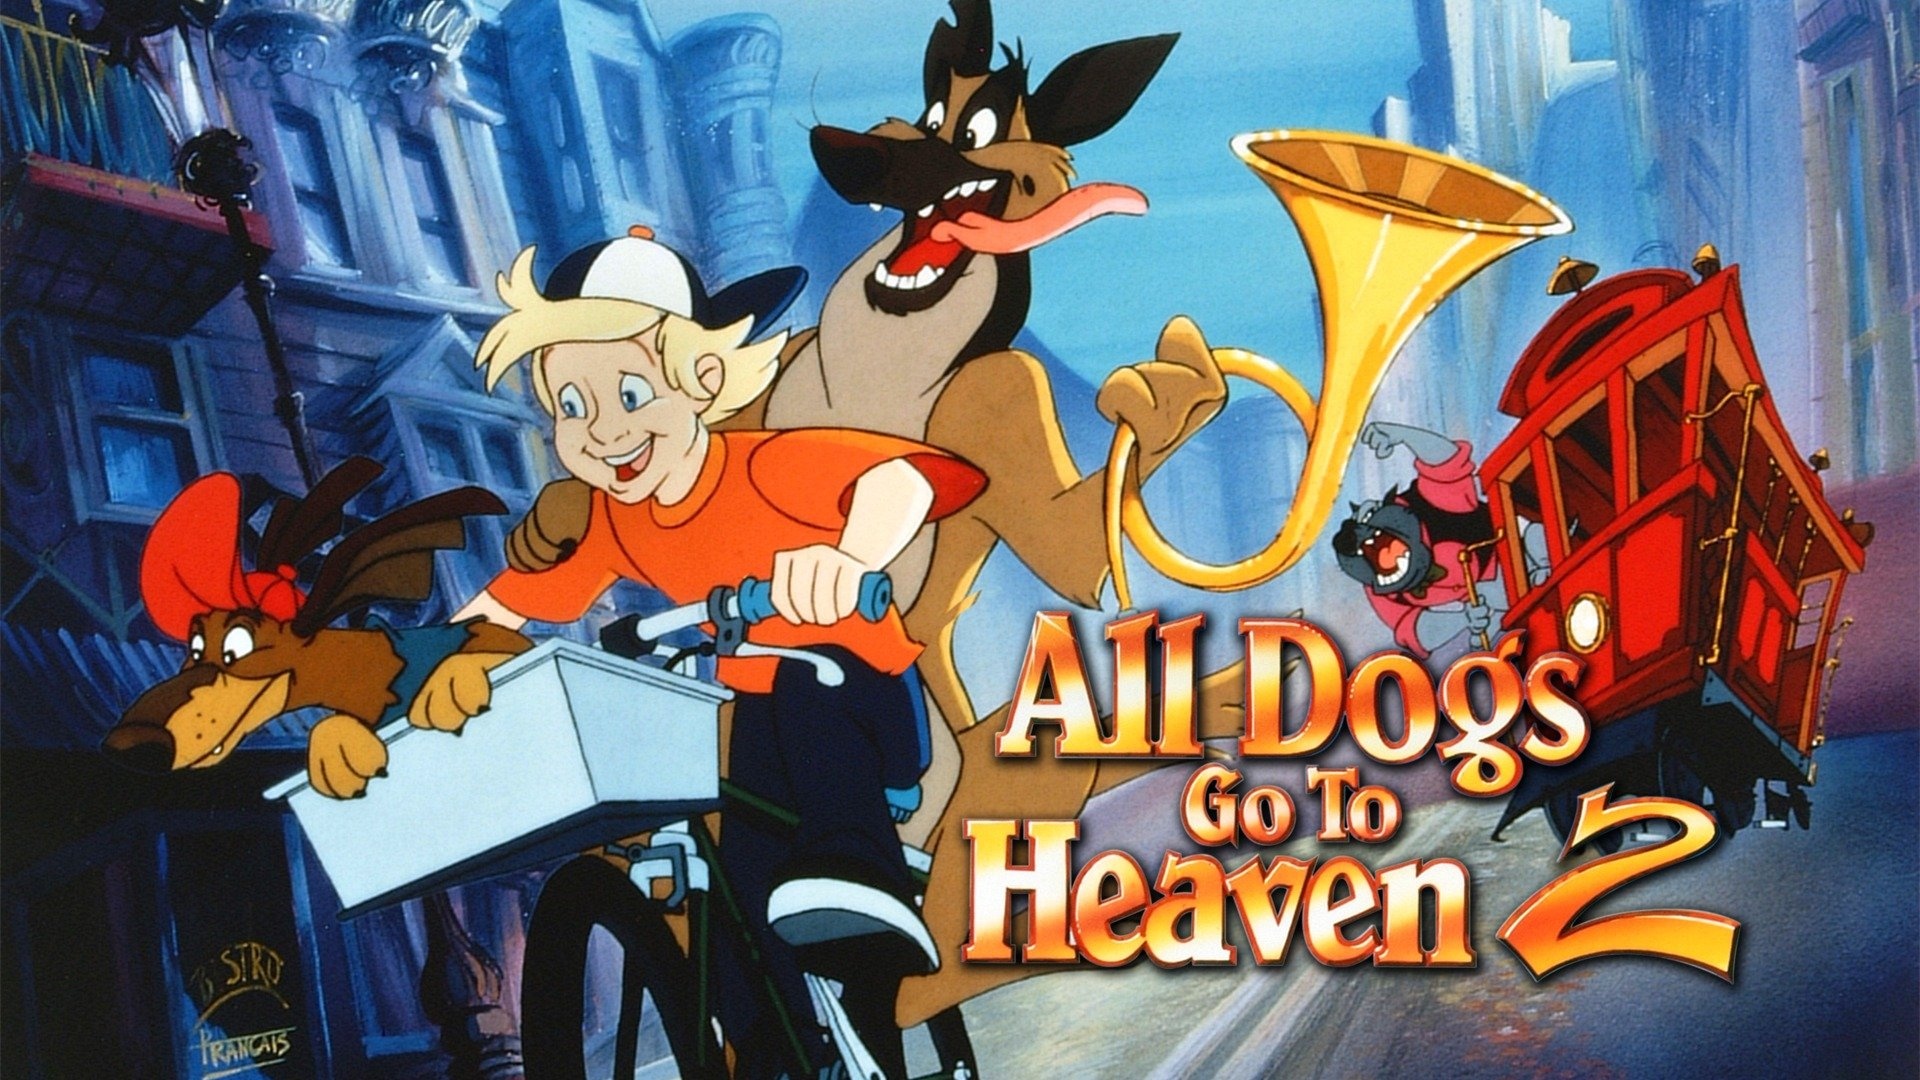 All Dogs Go to Heaven, Watch full movie online, Plex, Animation, 1920x1080 Full HD Desktop